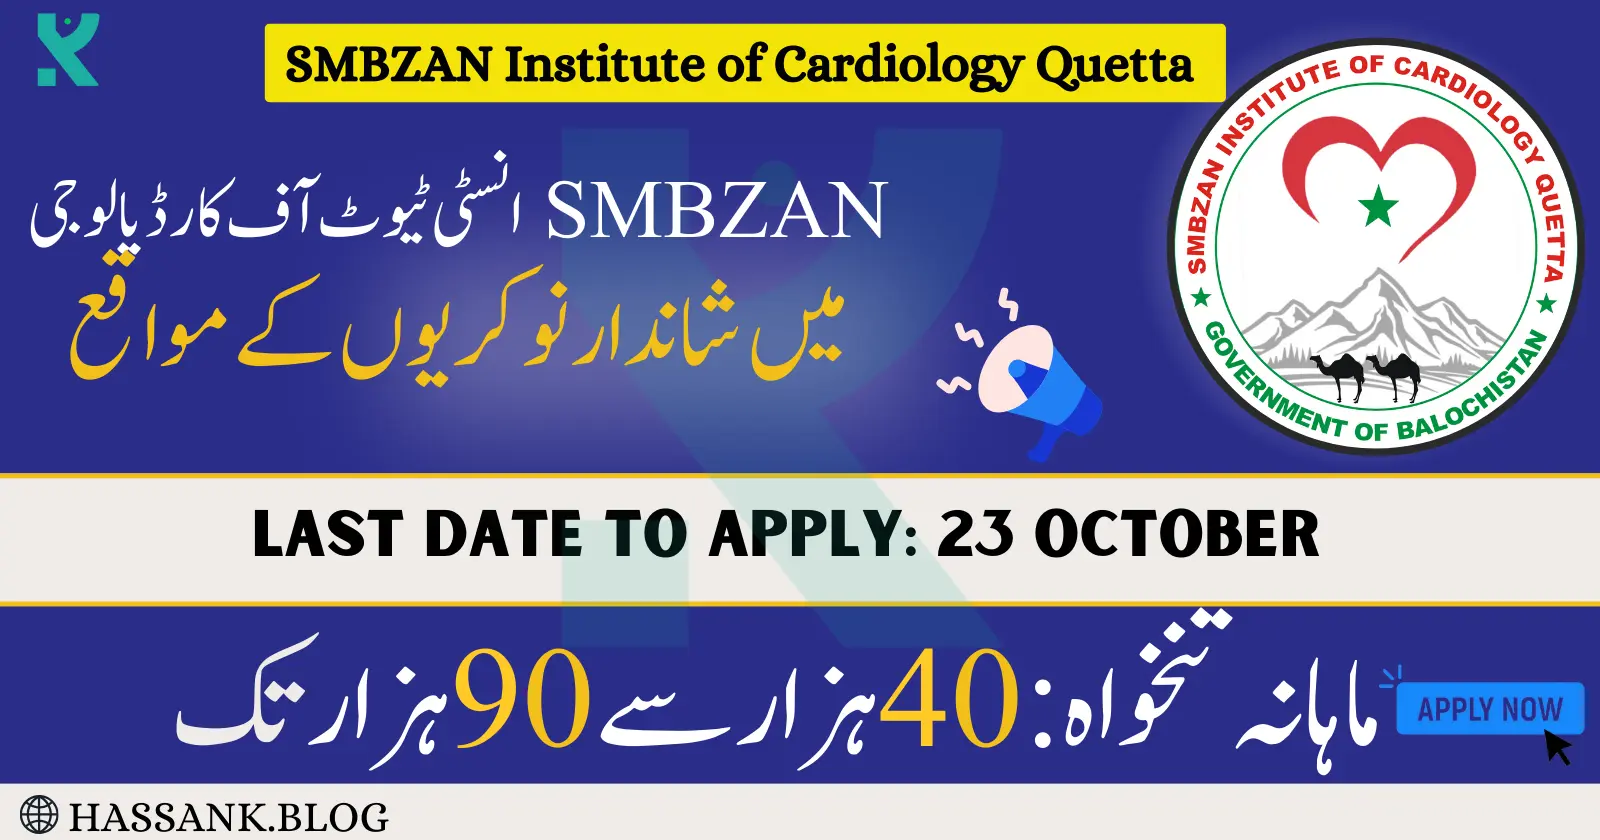 SMBZAN Institute of Cardiology Quetta